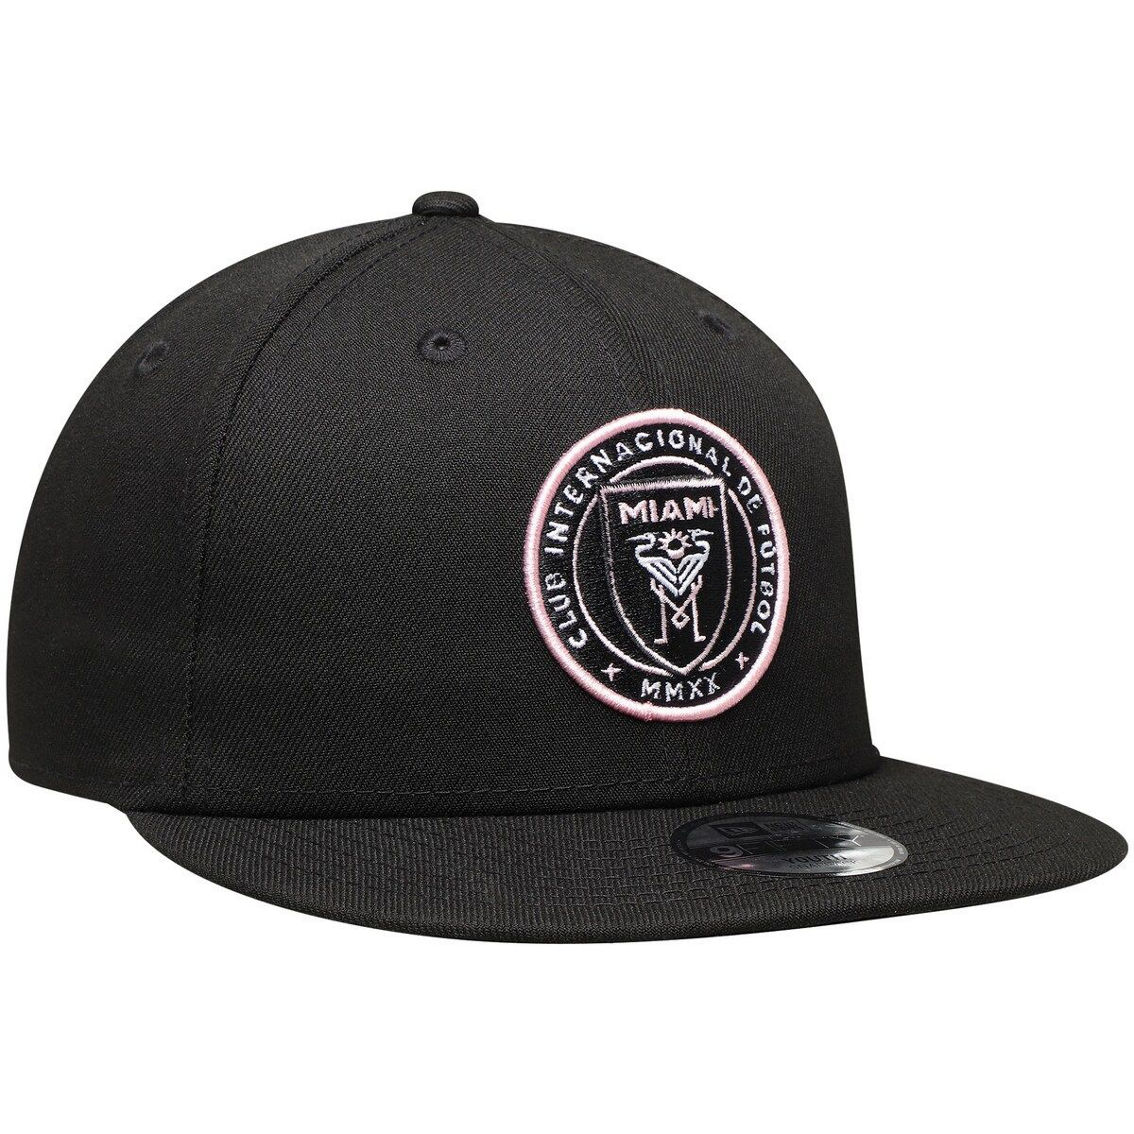 New Era Youth Black Inter Miami CF 9FIFTY Team Logo Snapback Hat - Image 4 of 4